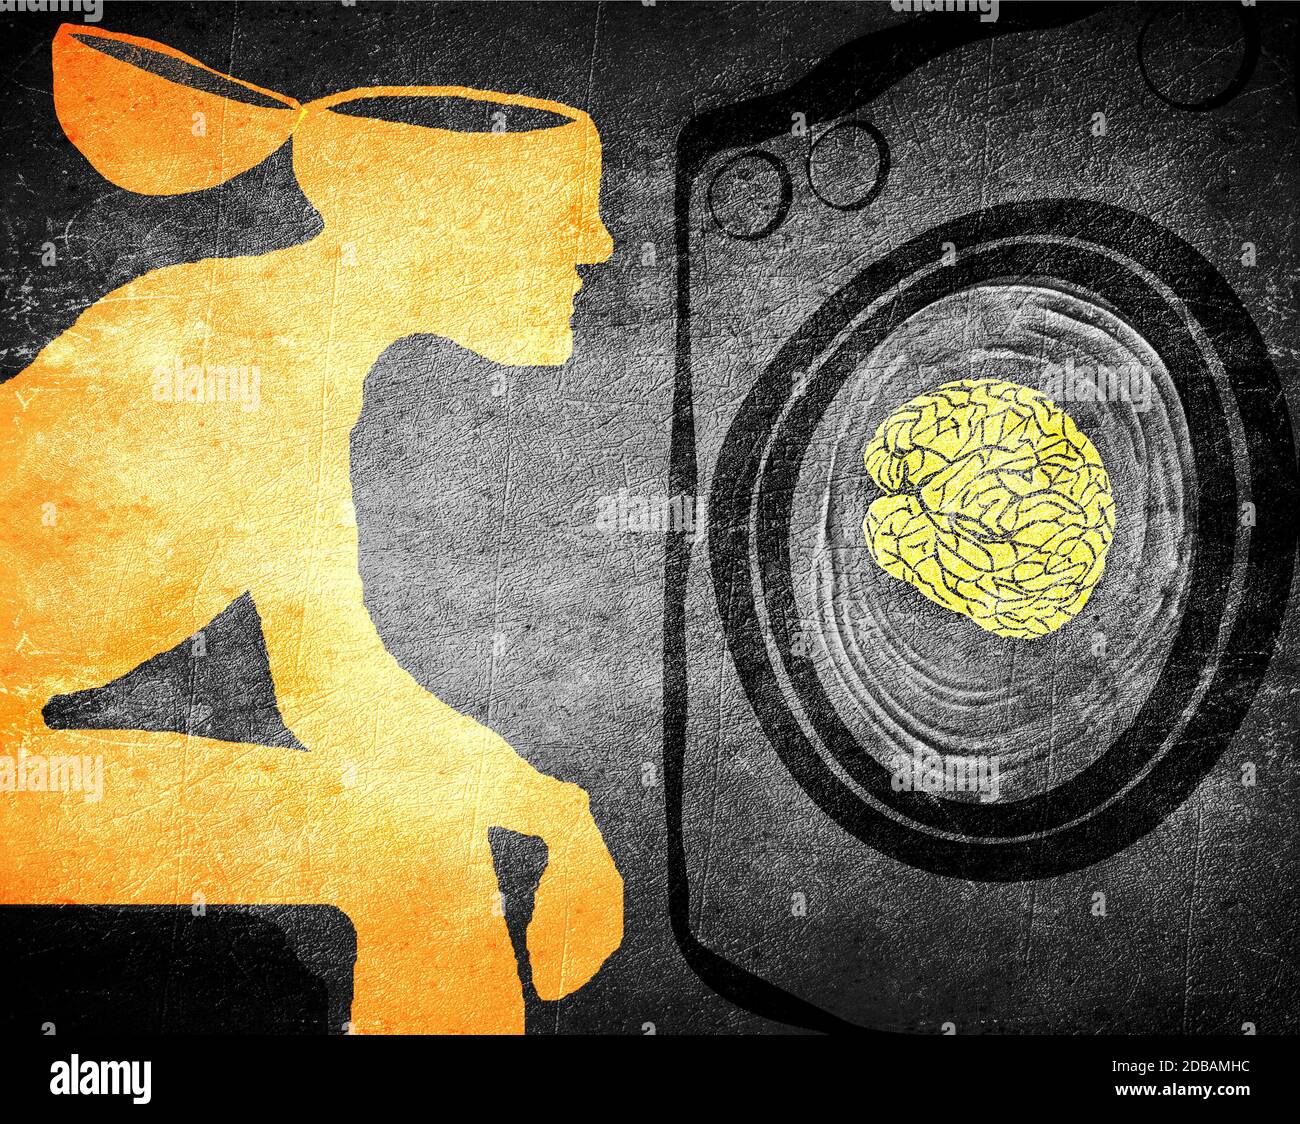 washing brain illustration concept Stock Photo